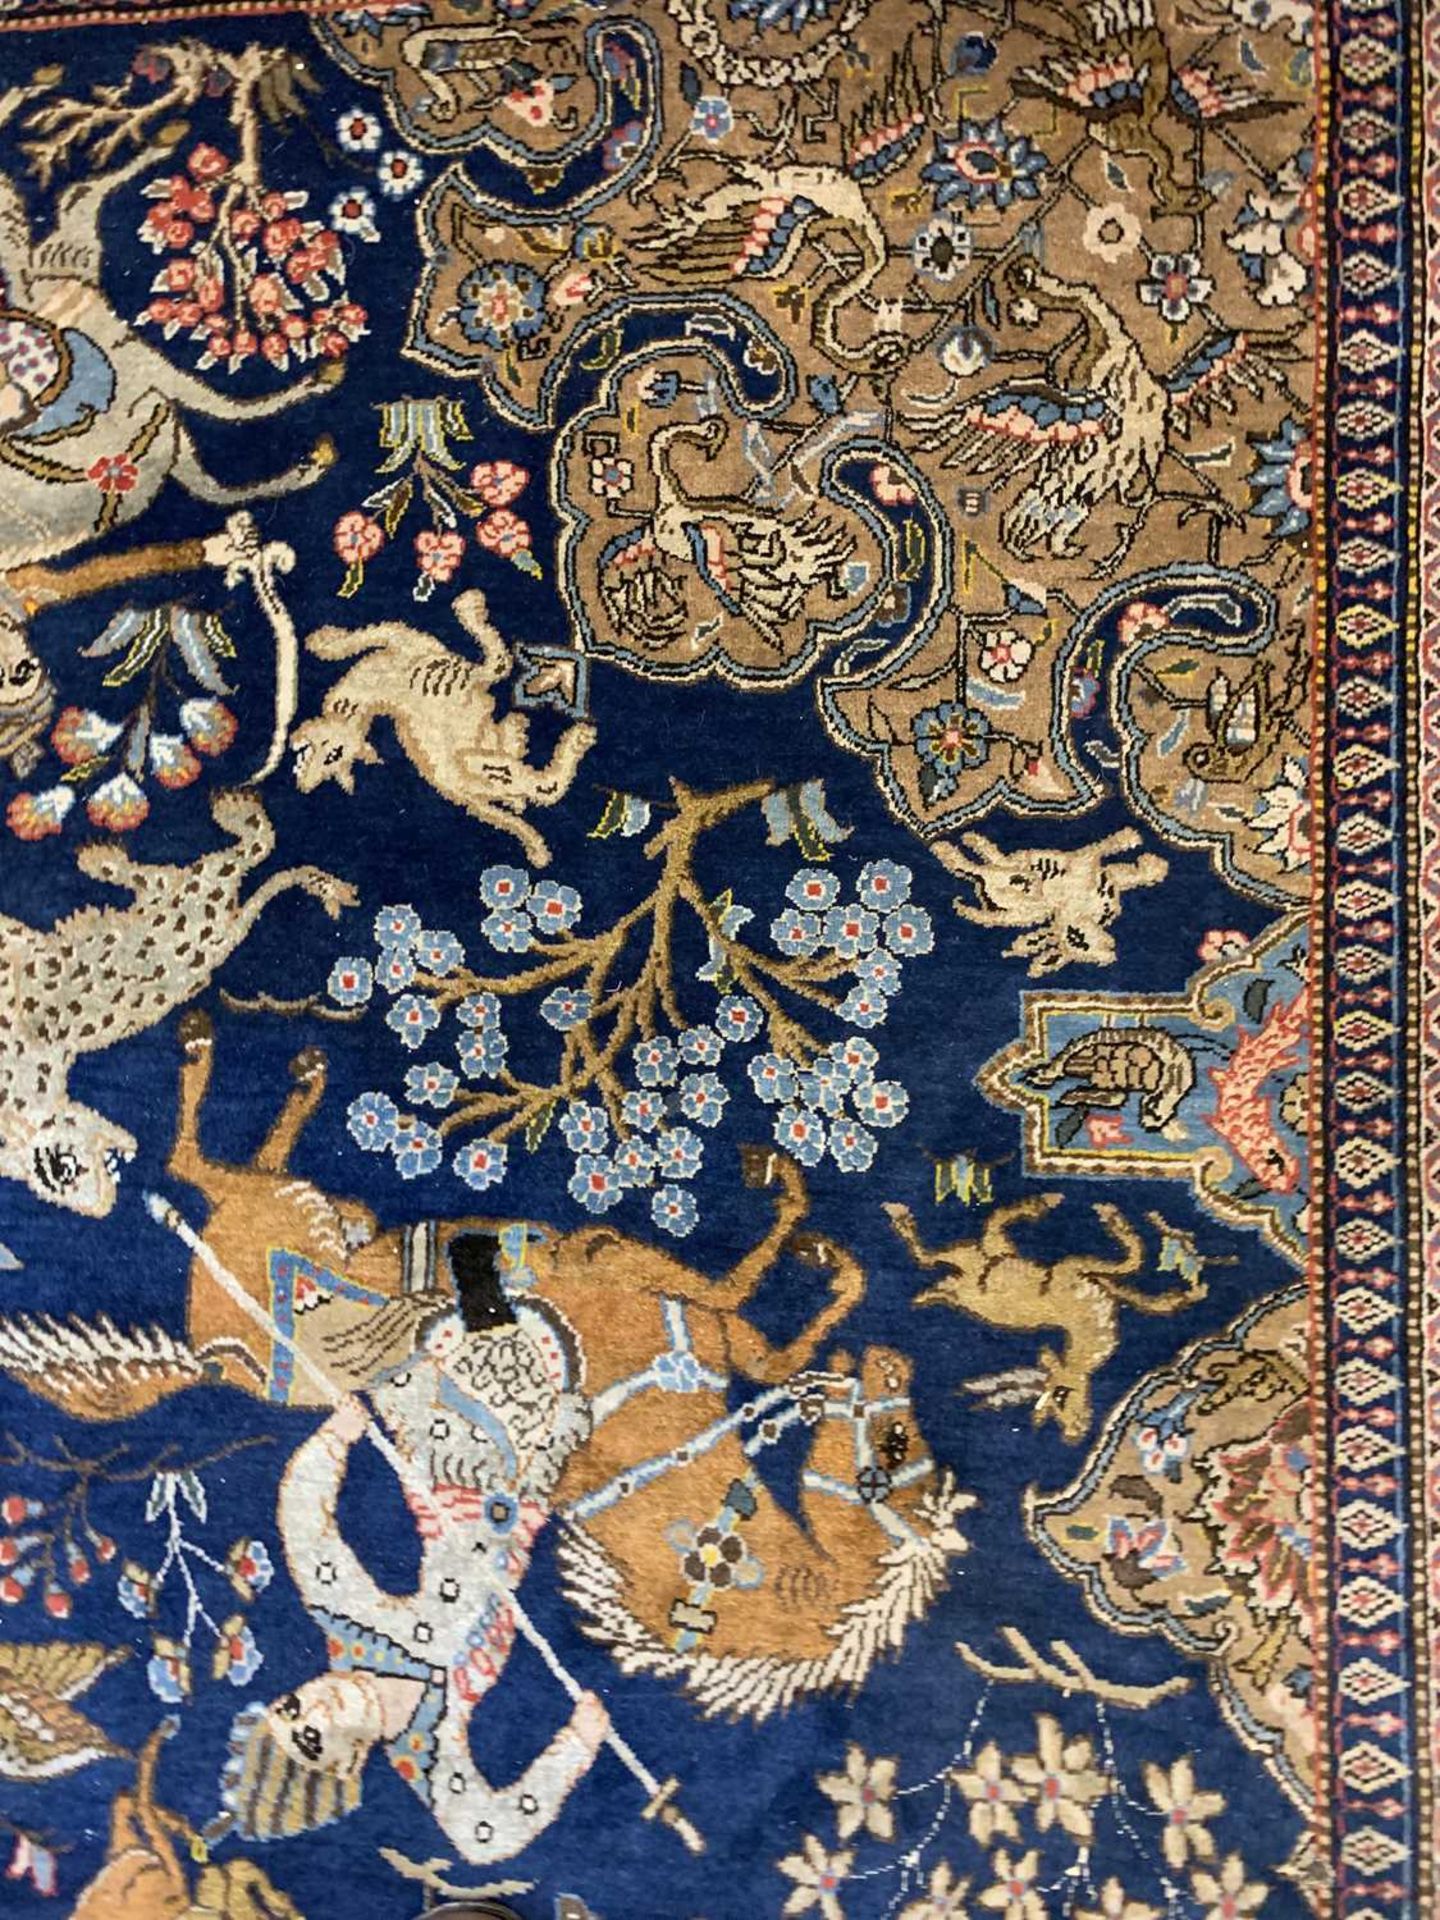 A Tehran Qum carpet, - Image 21 of 25